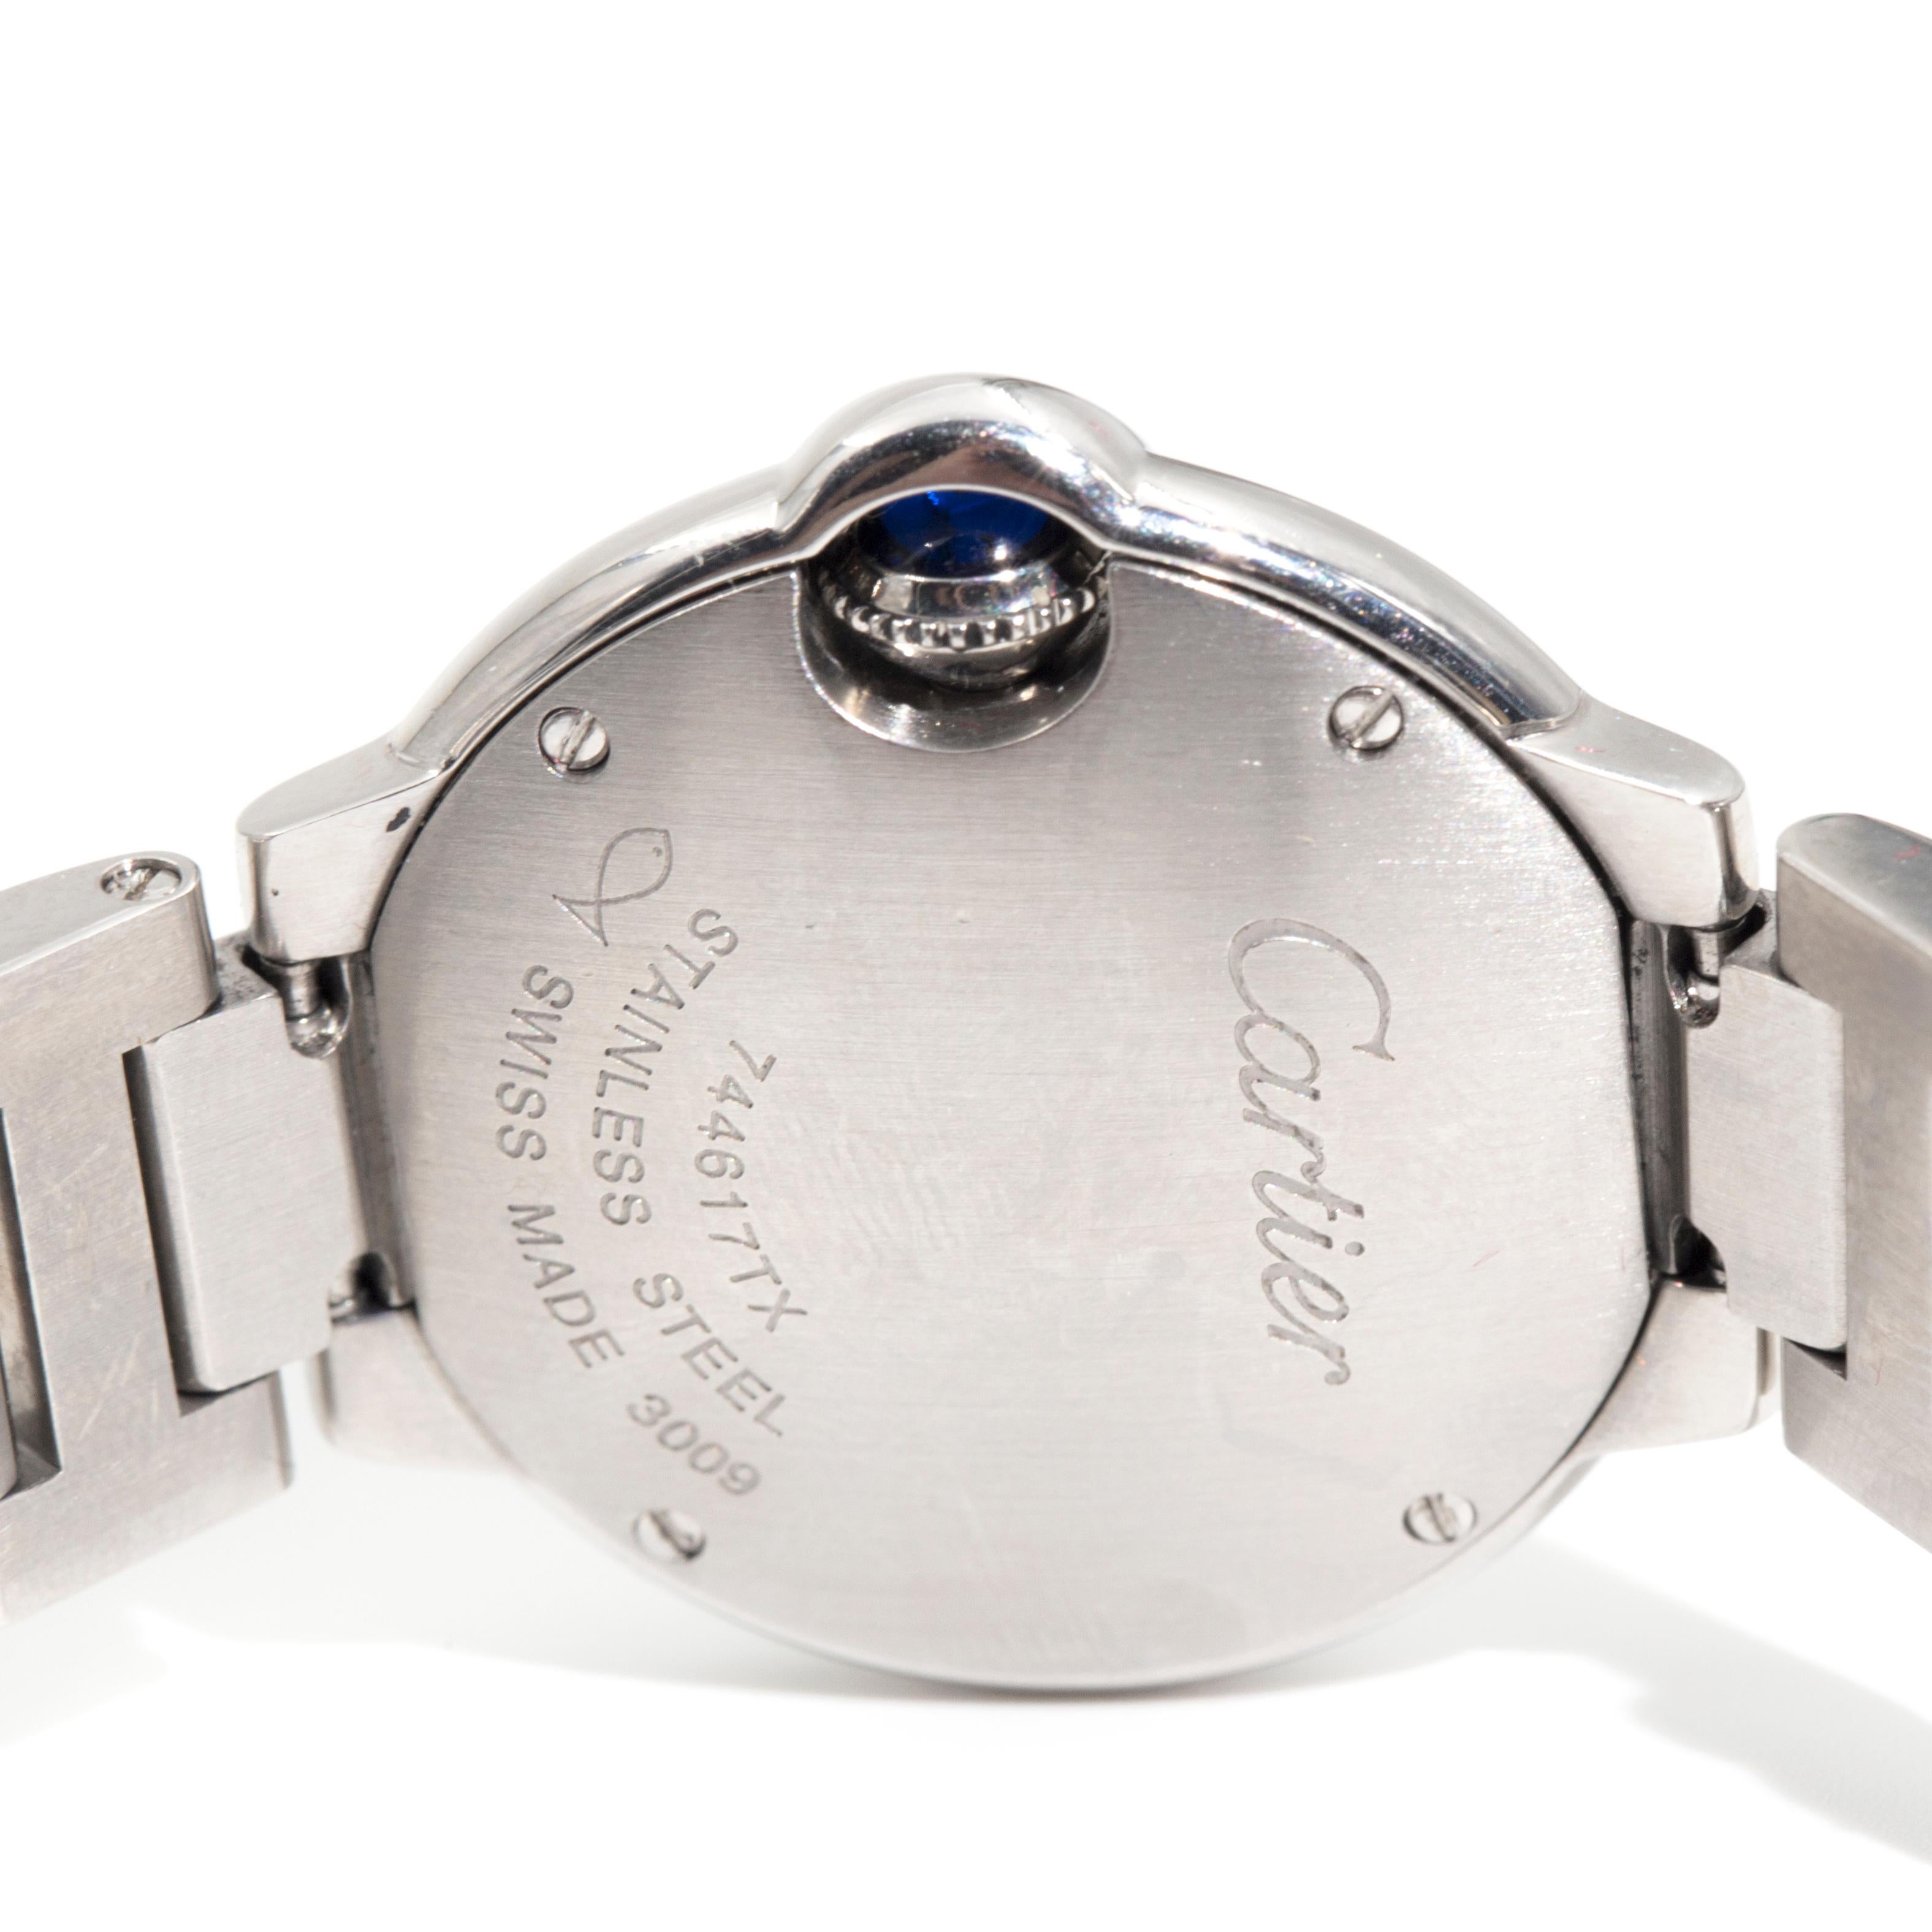 Ballon Bleu De Cartier Vintage Ladies Stainless Steel Watch 9